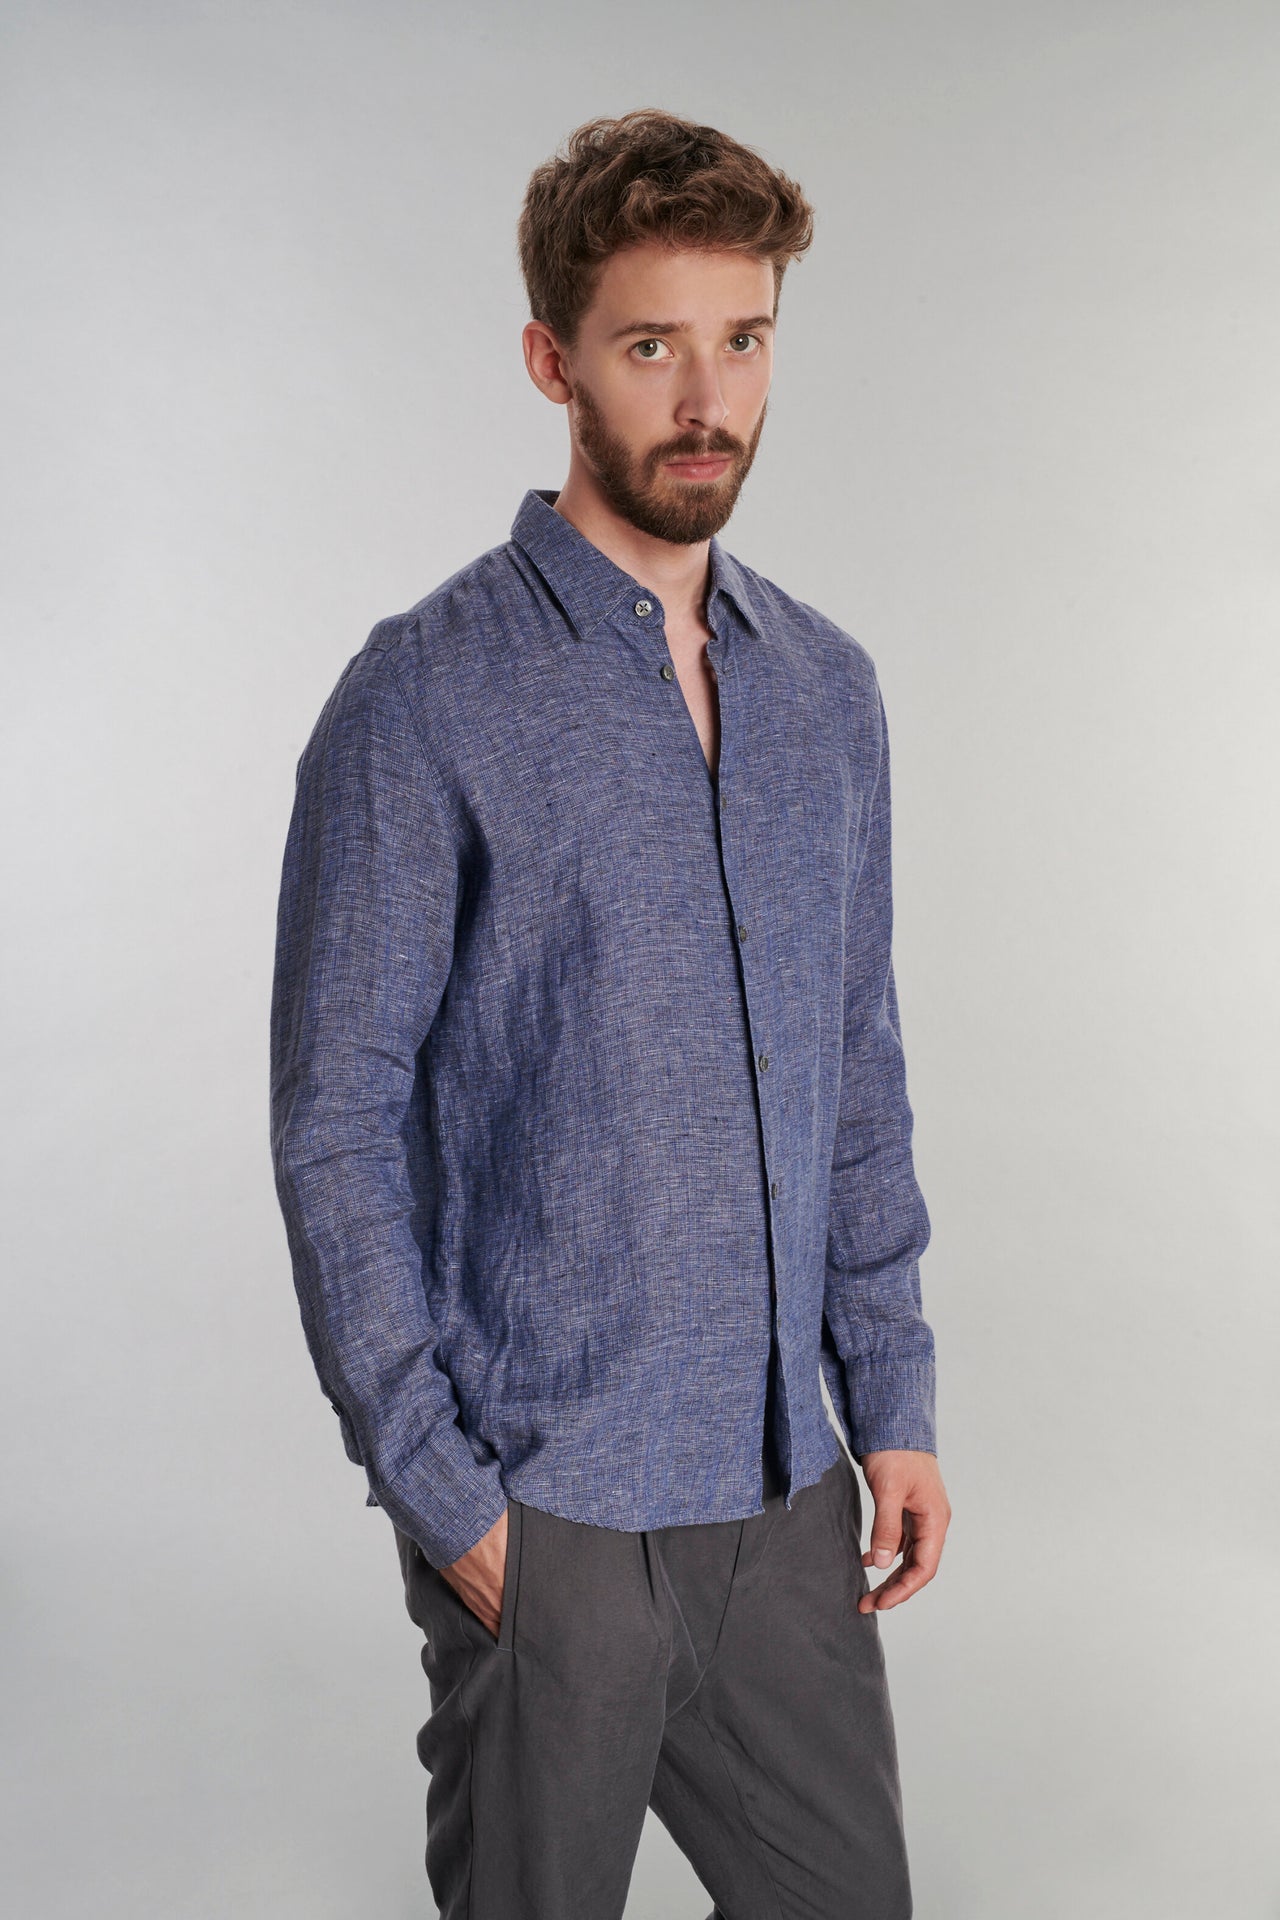 Feel Good Shirt in a Special Yarn Blue Italian Linen by Monti